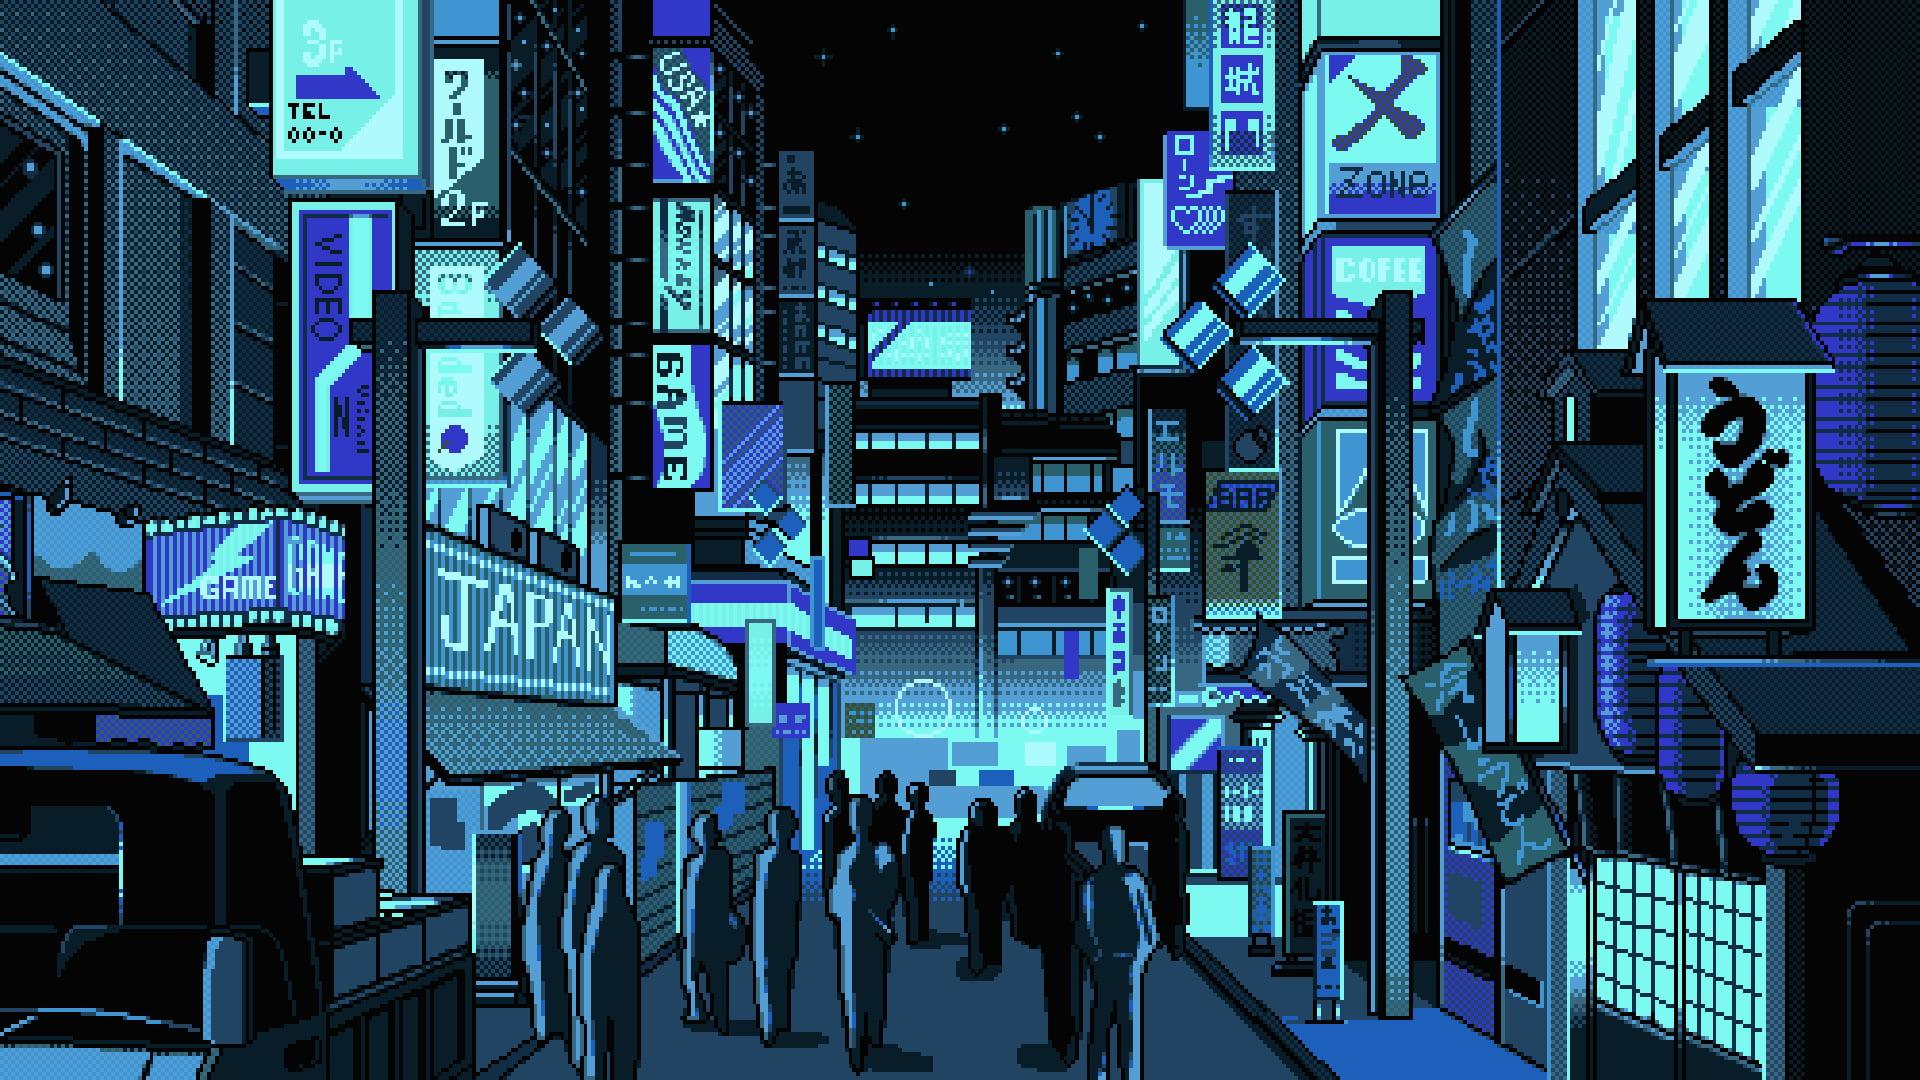 Japan buildings animated illustration, Japan, pixel art, street